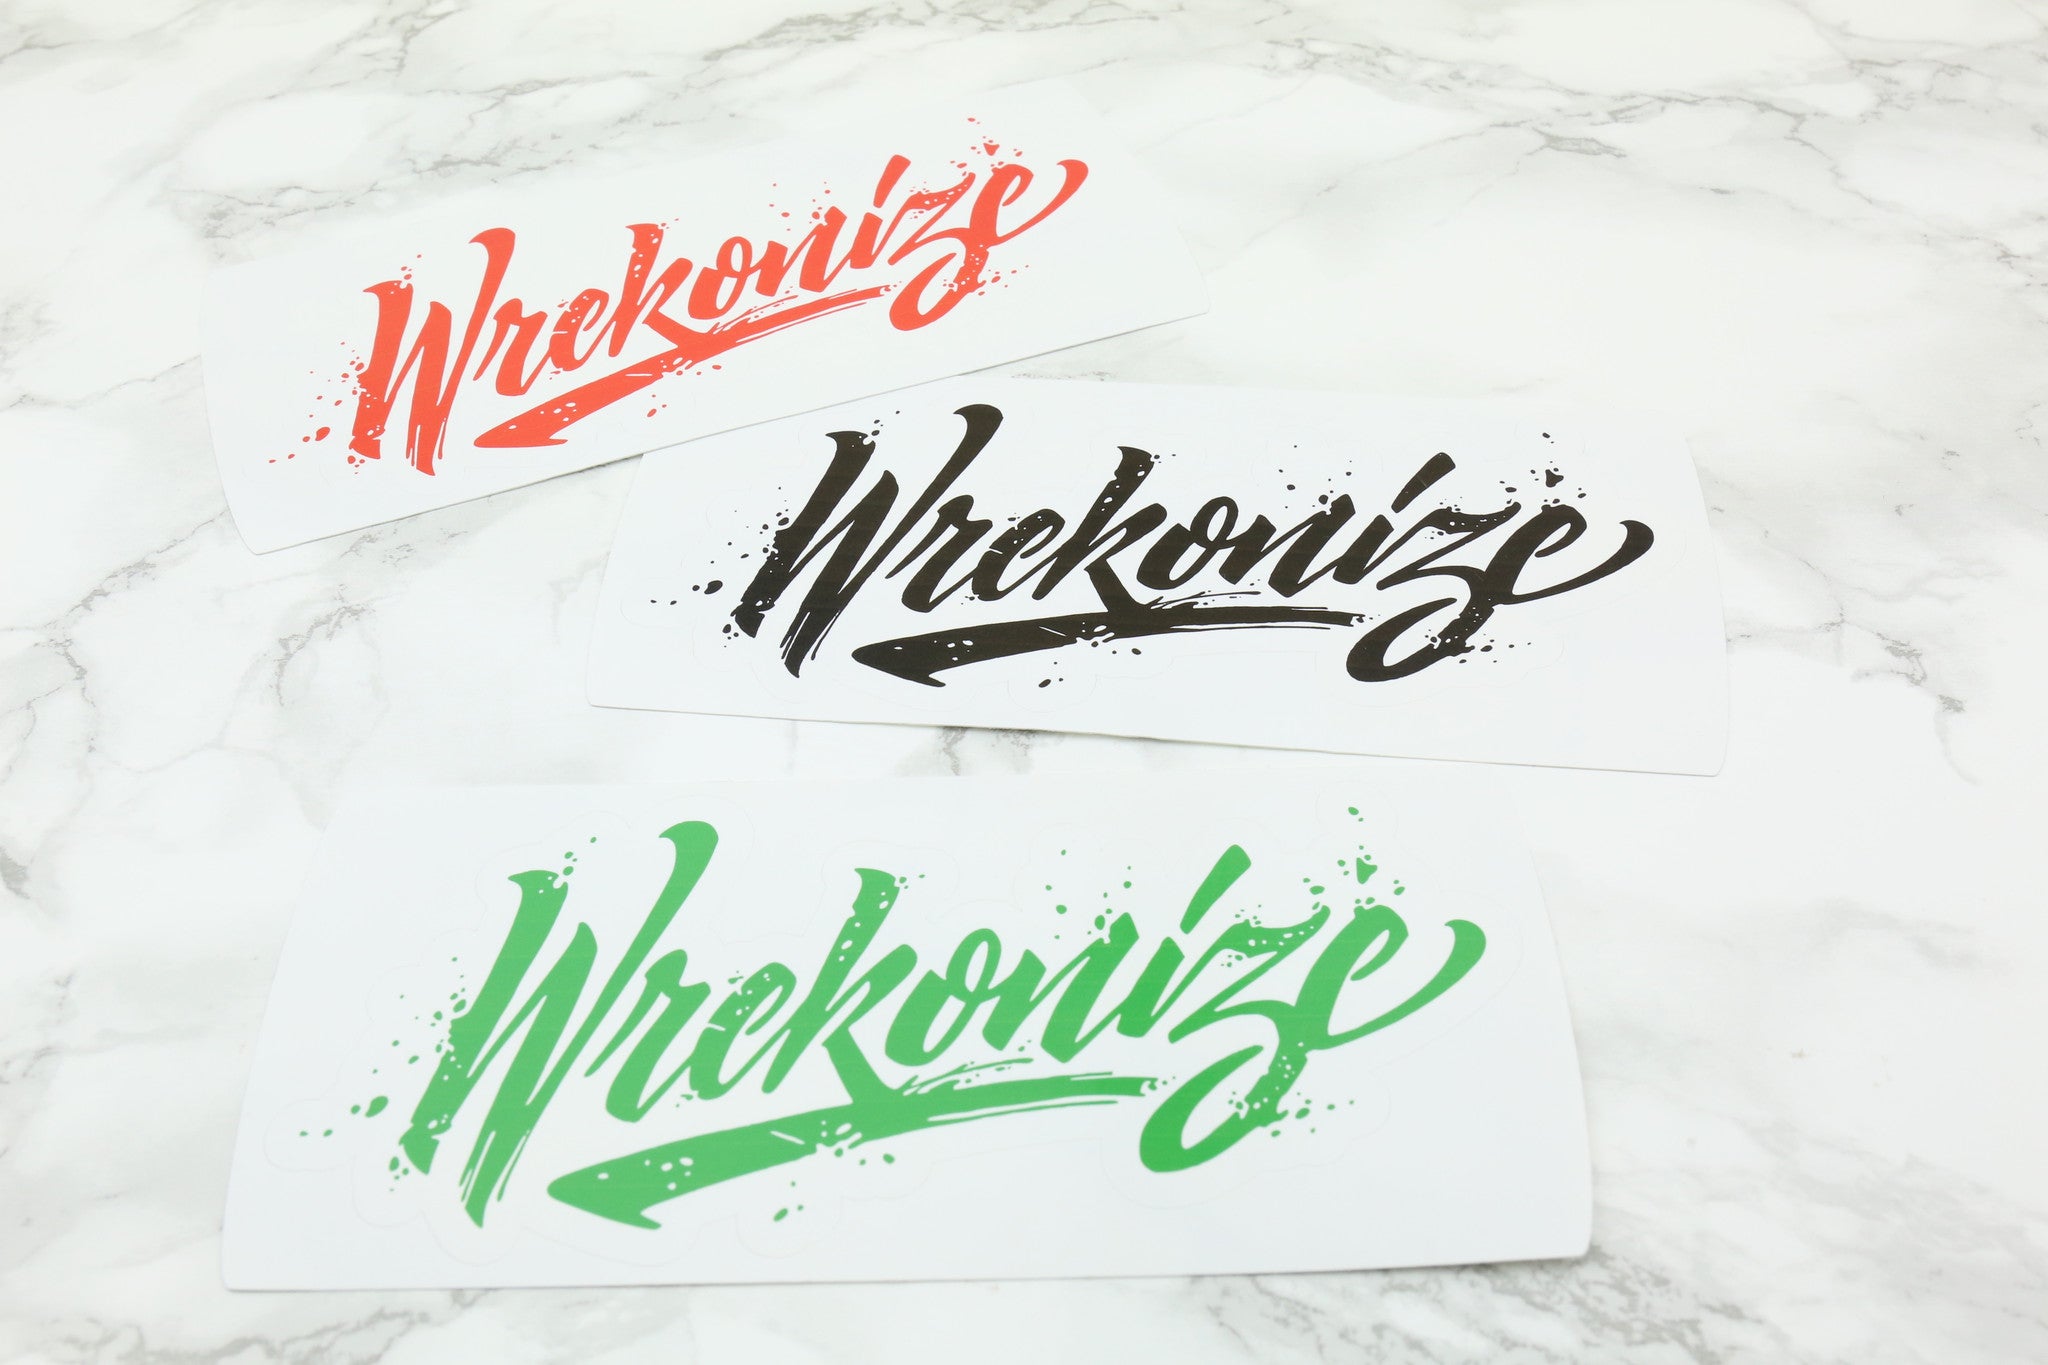 2016 Wrekonize Logo Sticker (3 Pack)